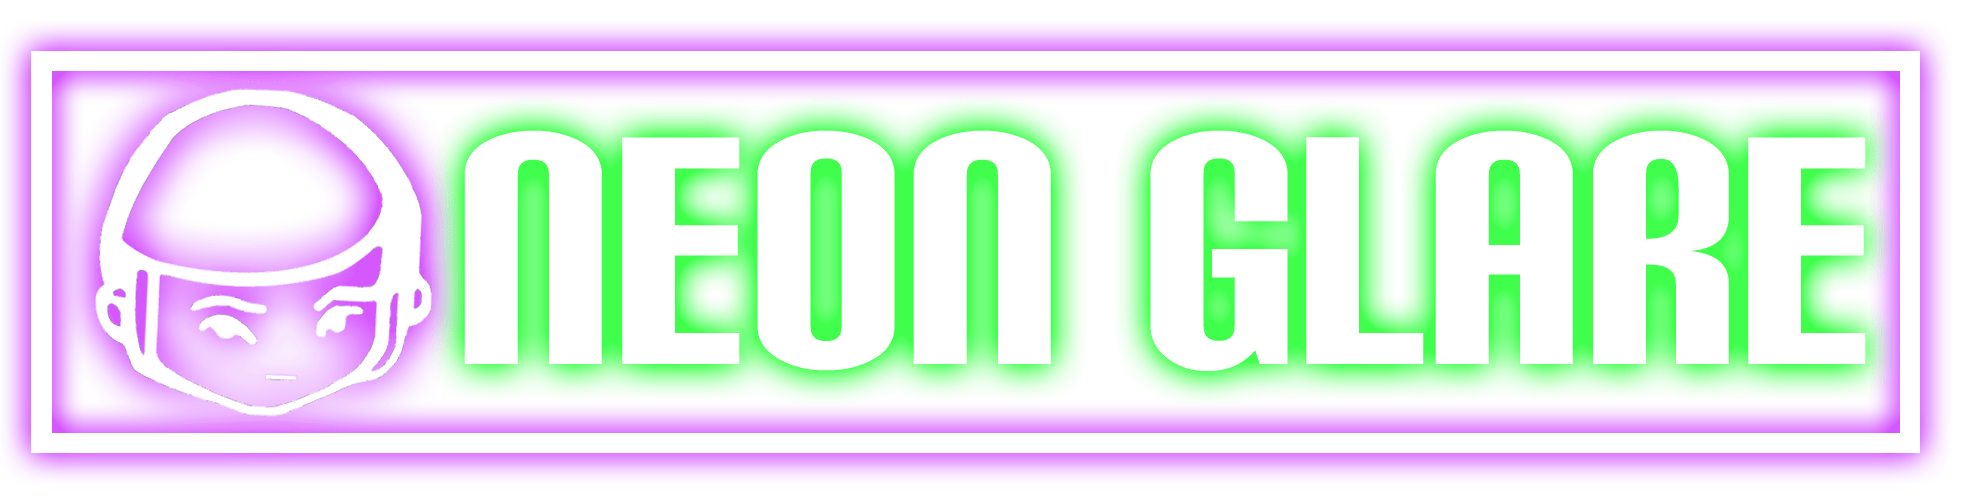 Neon Glare mobile logo